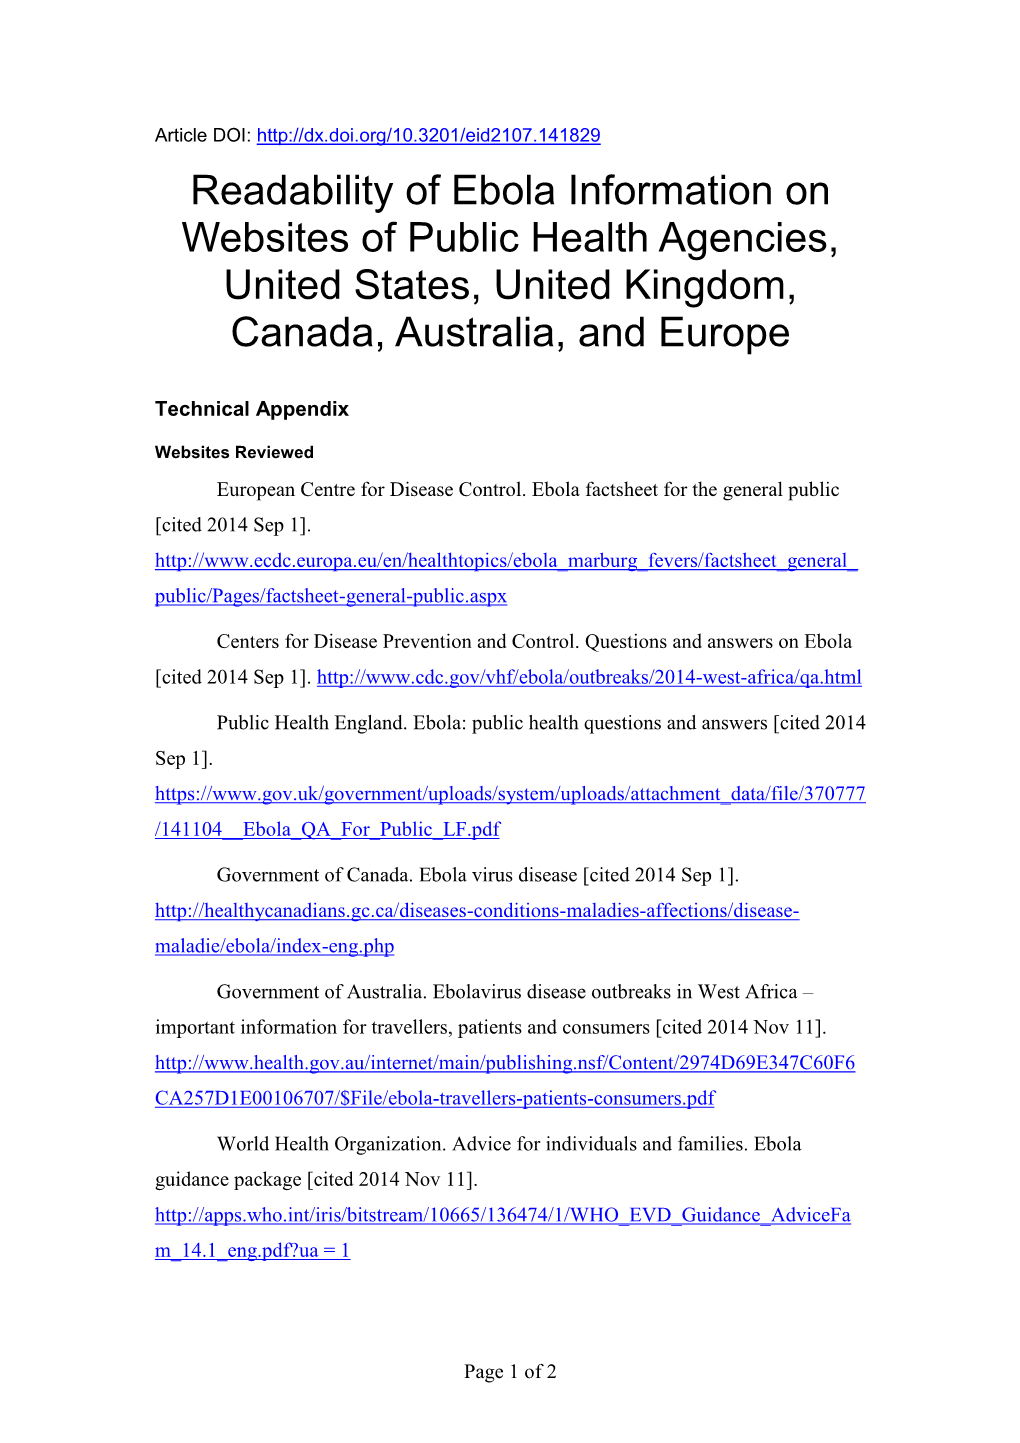 Readability of Ebola Information on Websites of Public Health Agencies, United States, United Kingdom, Canada, Australia, and Europe